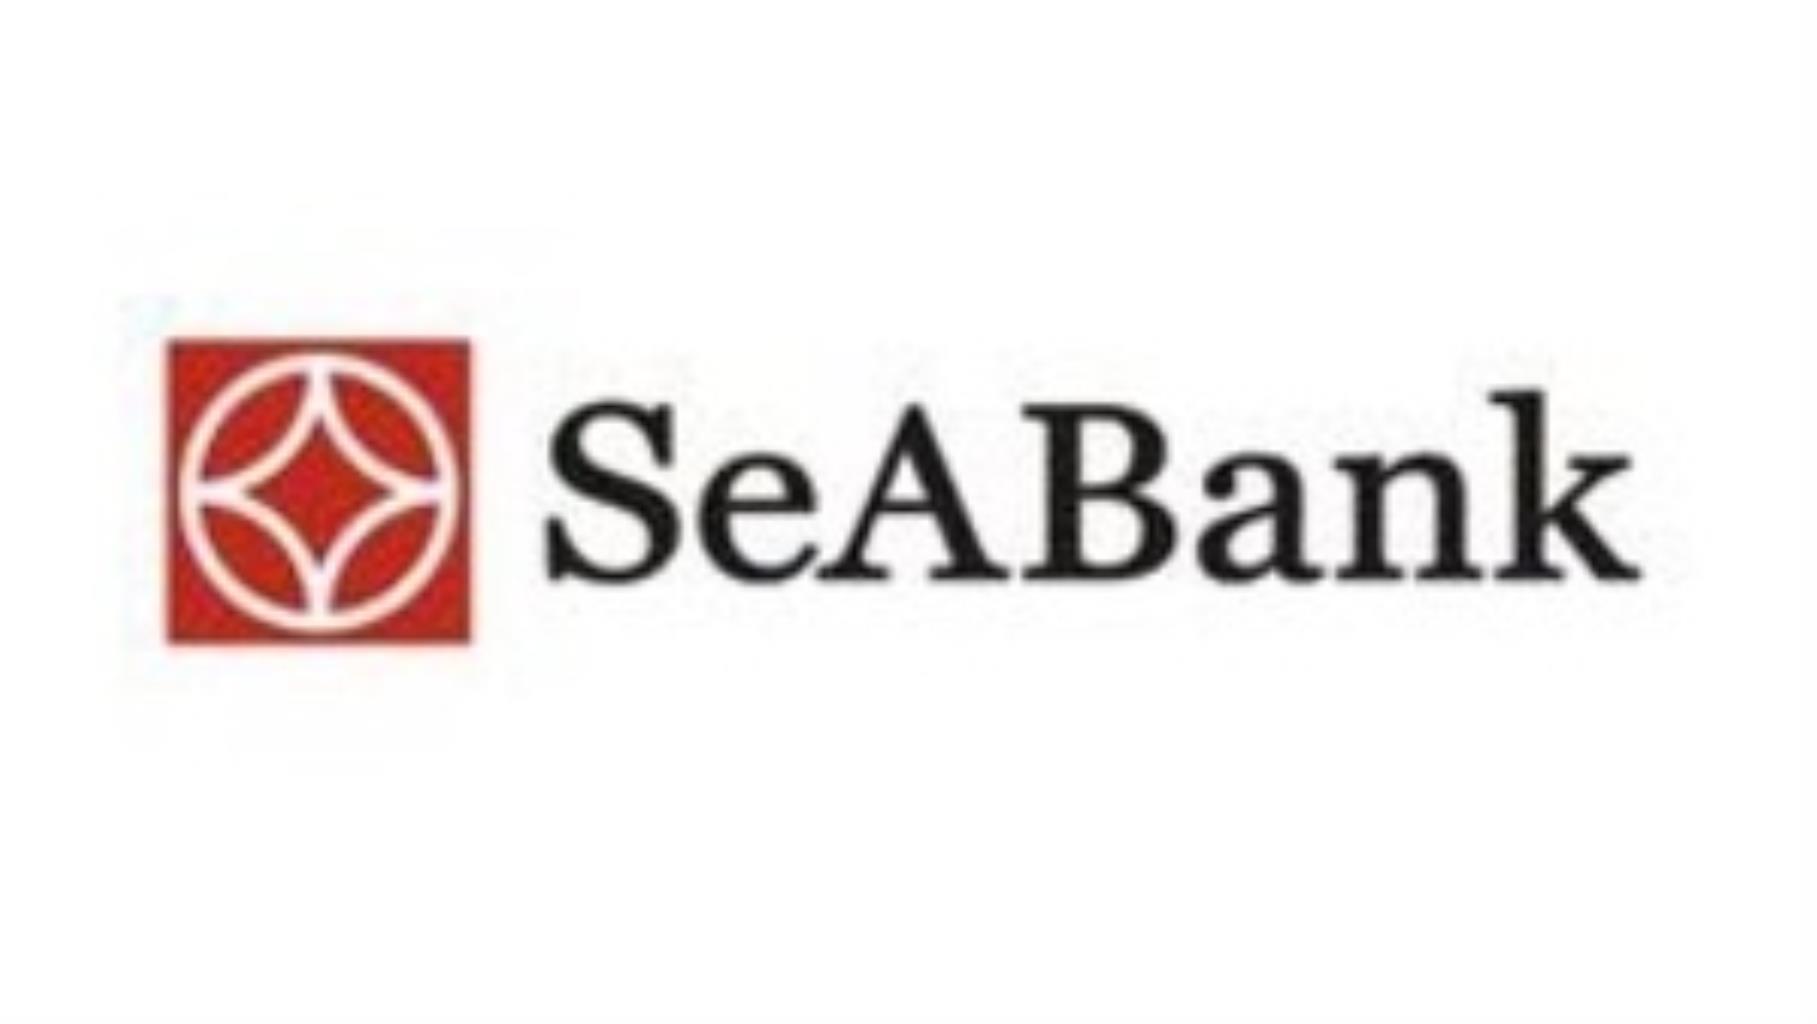 Seabank